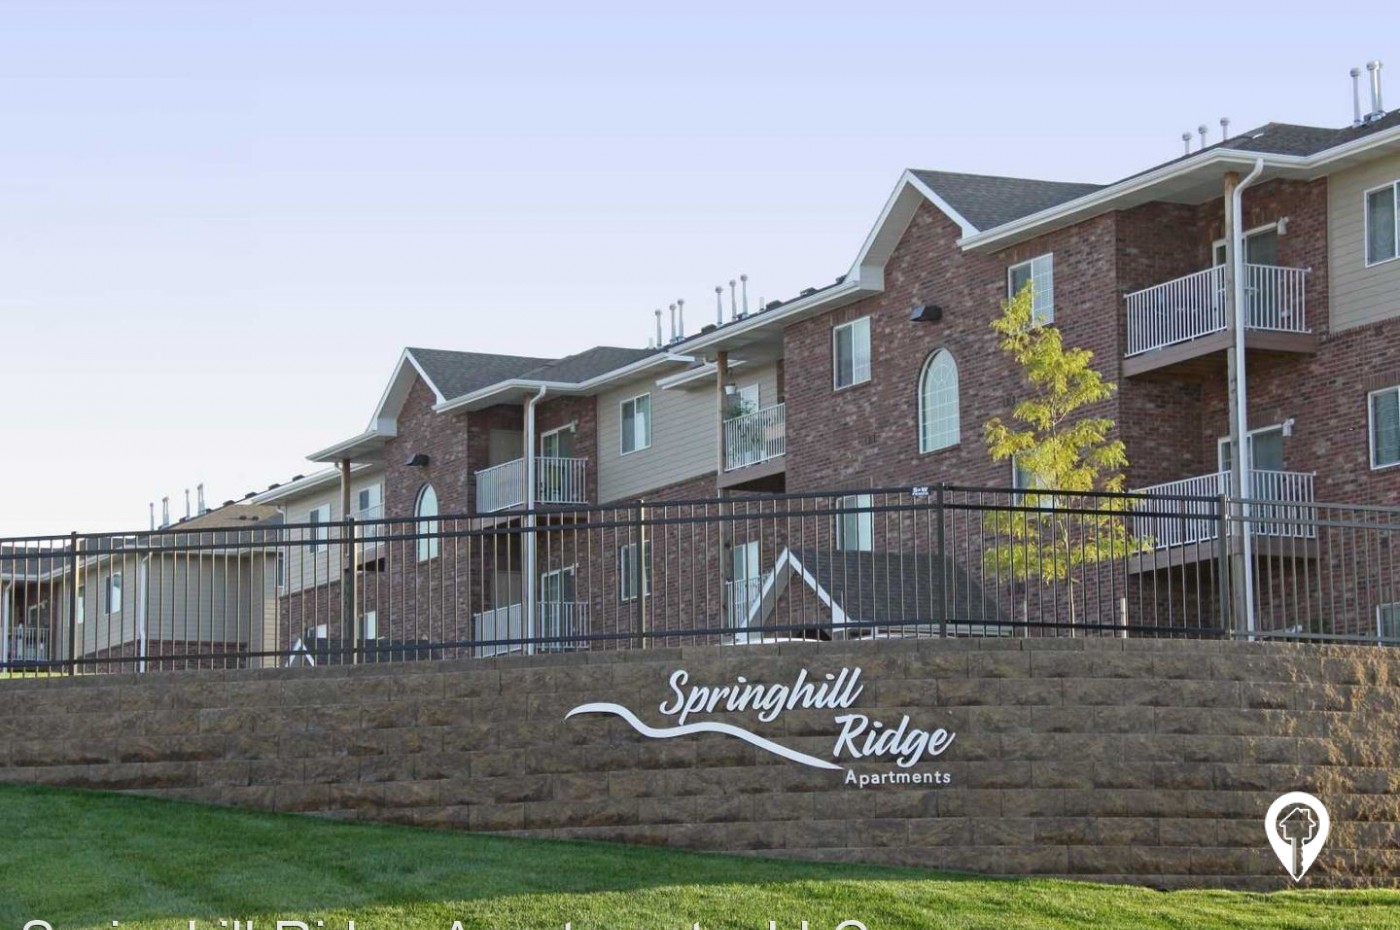 Springhill Ridge Apartments, LLC - Springhill Ridge Apartments